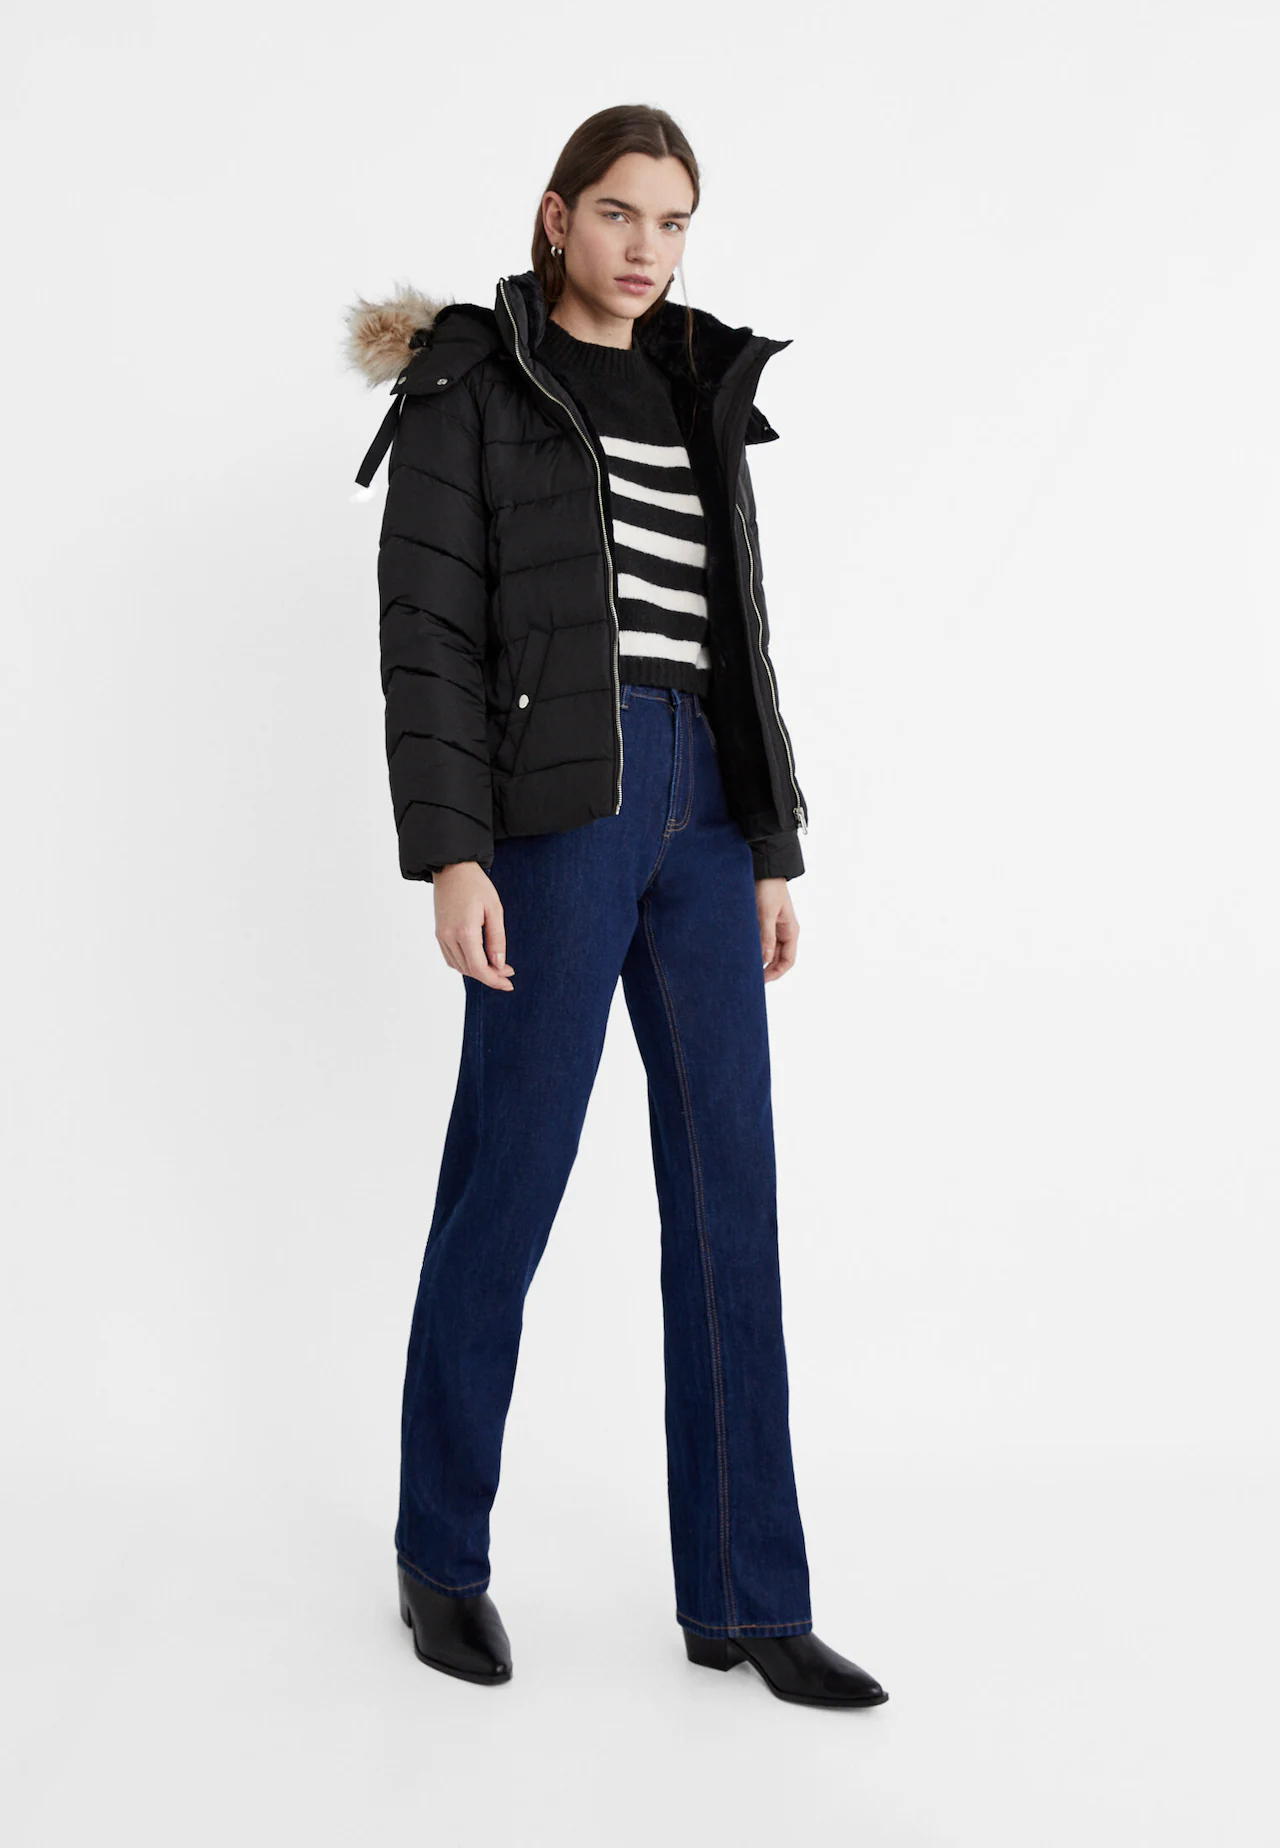 Shop Women's Detachable Jacket Hoods and Liners